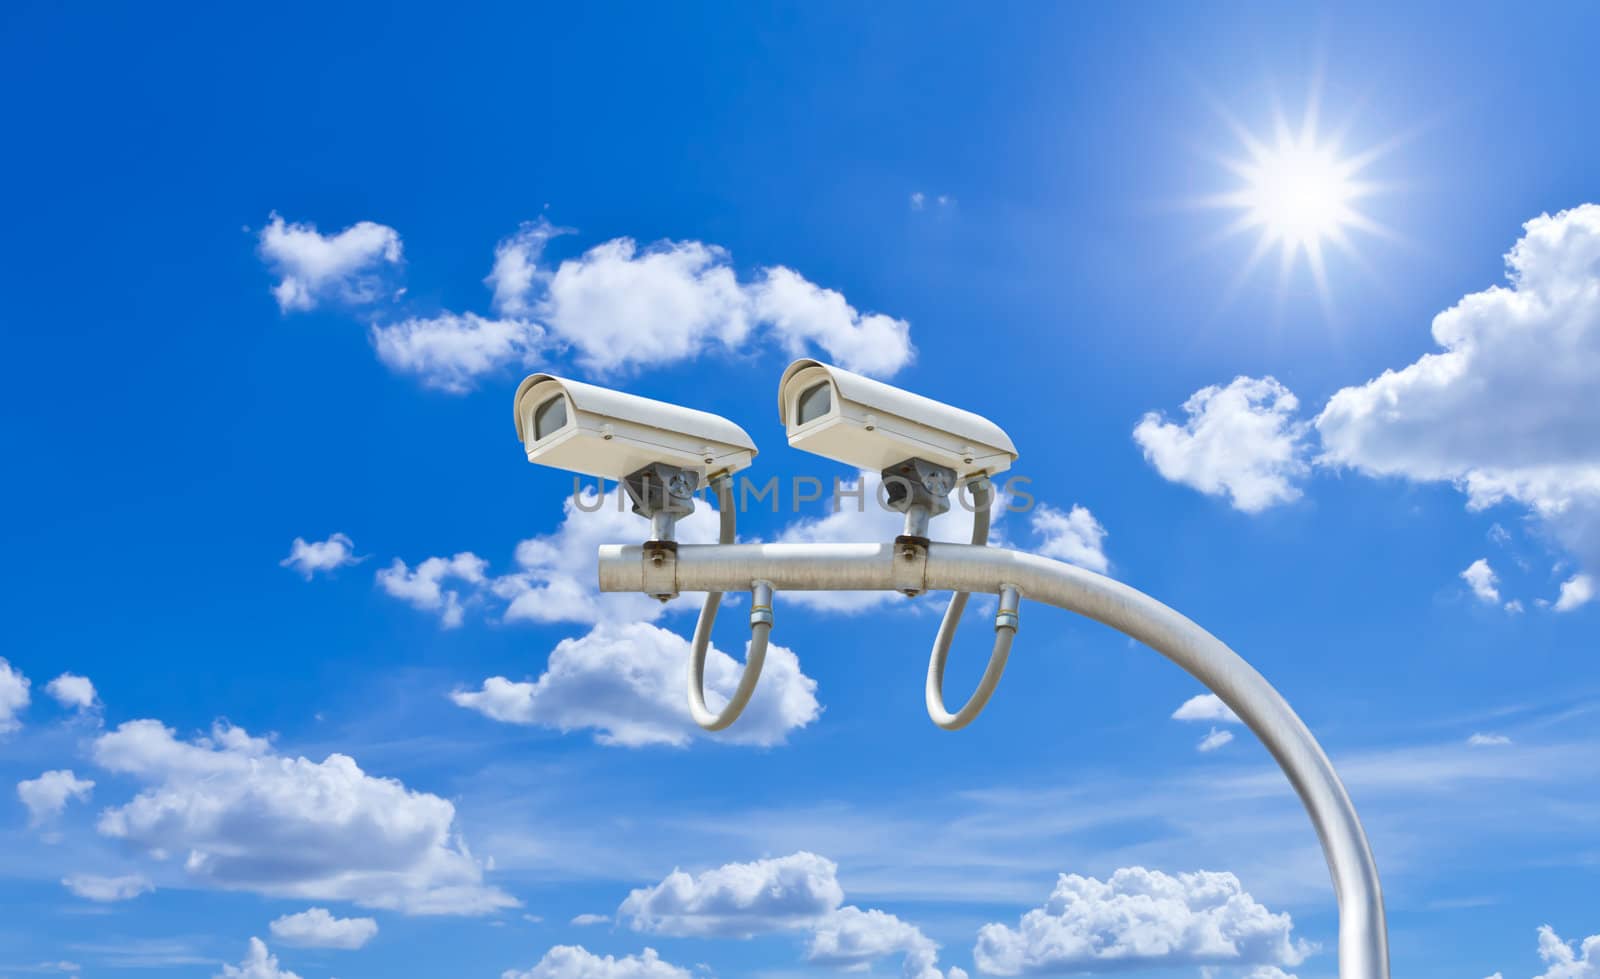 surveillance cameras against blue sky by tungphoto